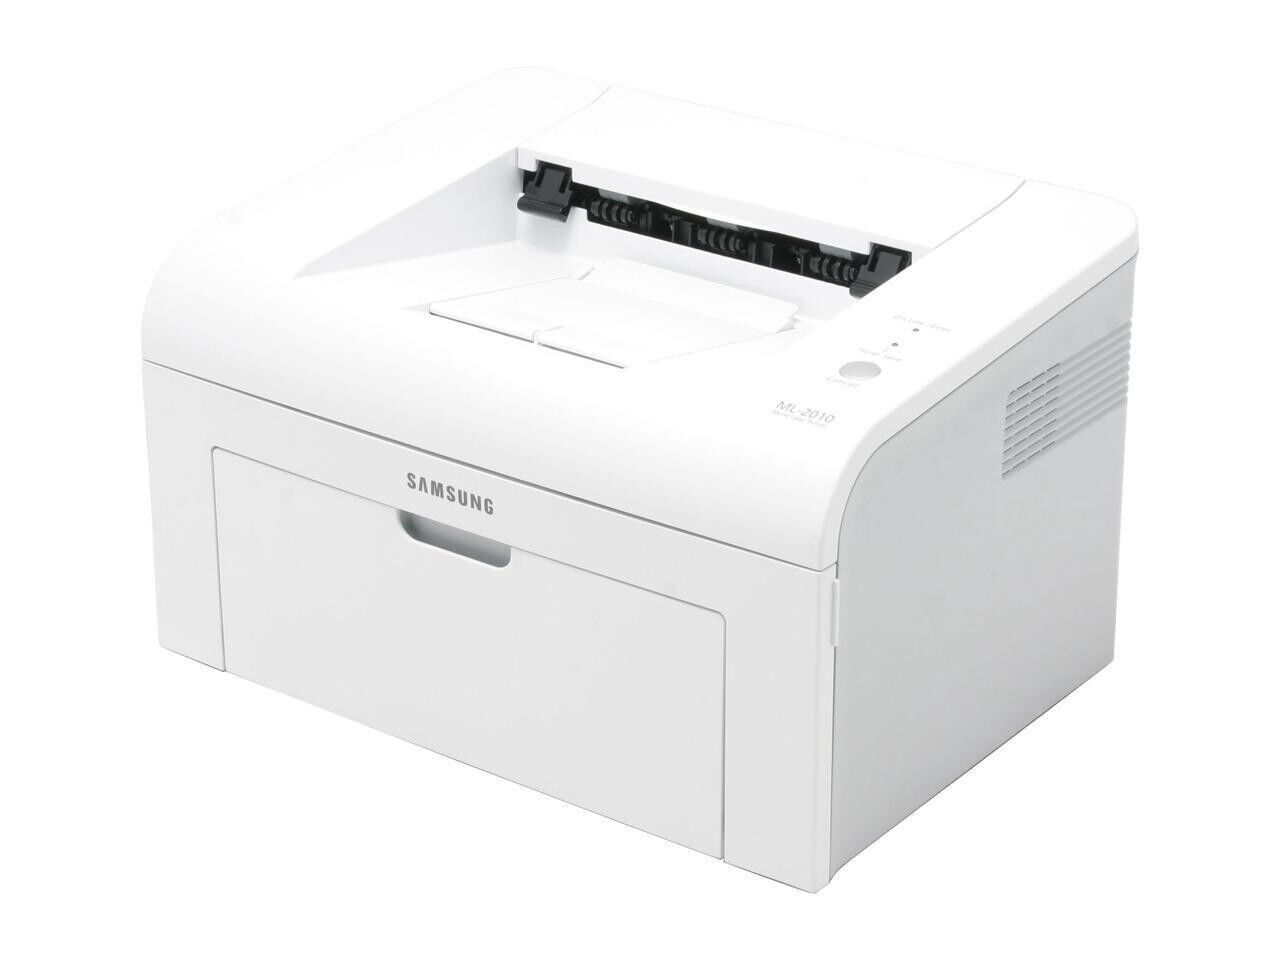 Samsung ML-4550 Laser Printer series